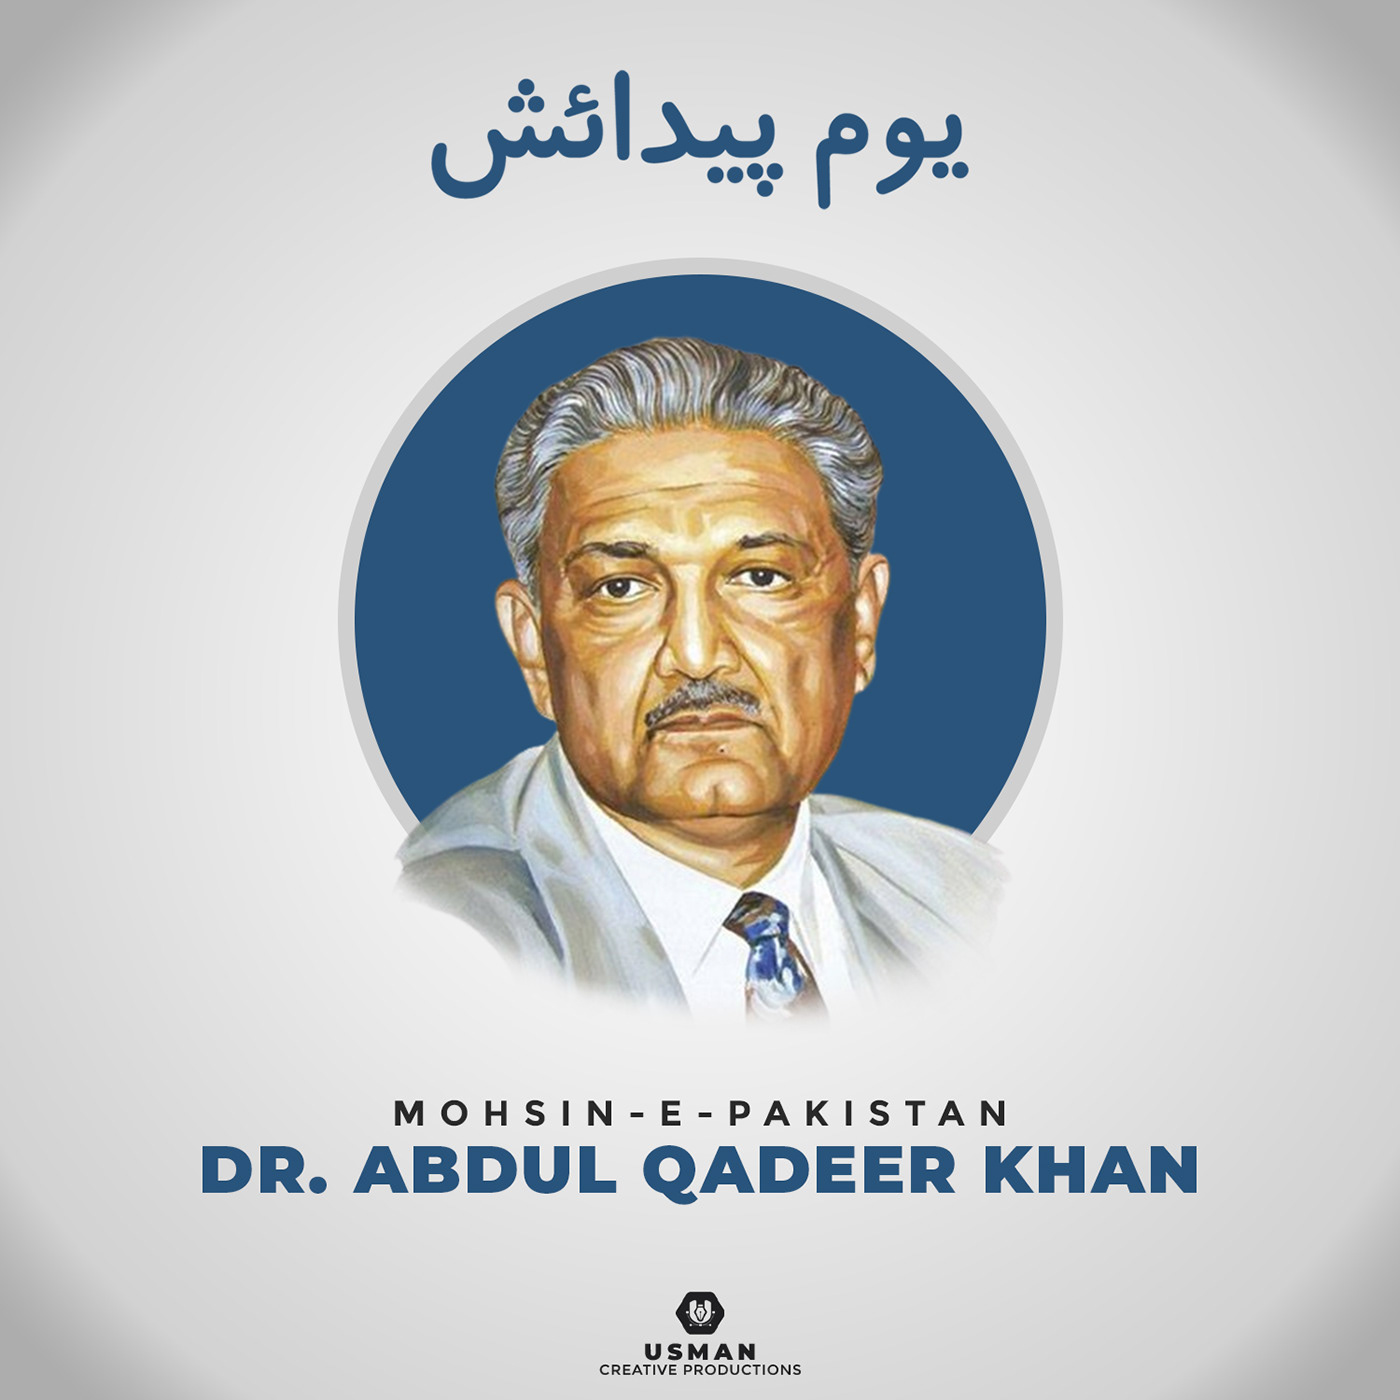 Pakistan Pakistan Zindabad post social media creative Advertising  Social media post Graphic Designer Abdul Qadeer Khan DR. ABDUL QADEER KHAN